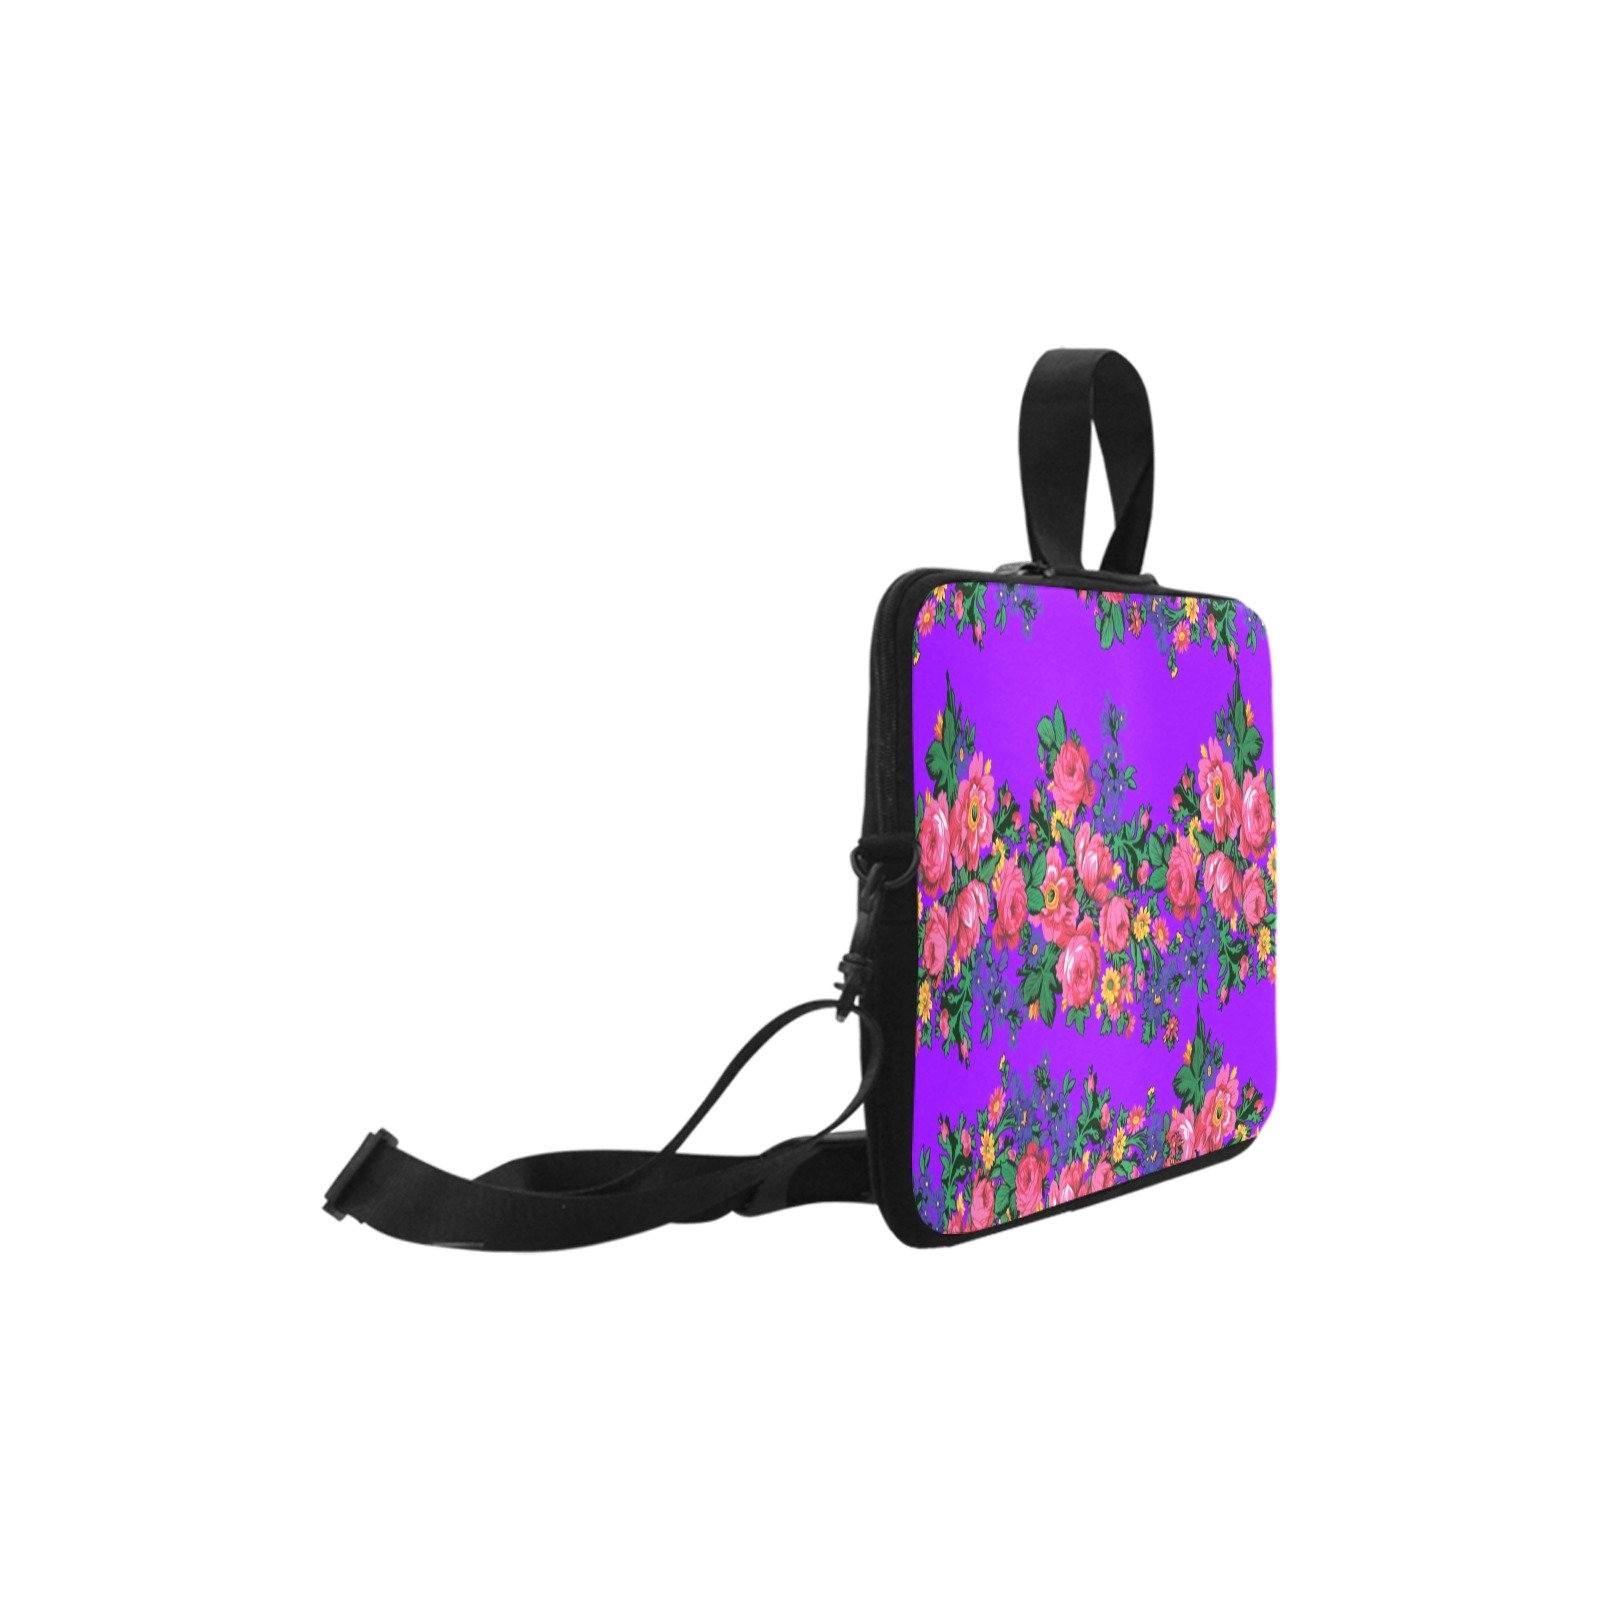 Kokum's Revenge Lilac Laptop Handbags 10" bag e-joyer 